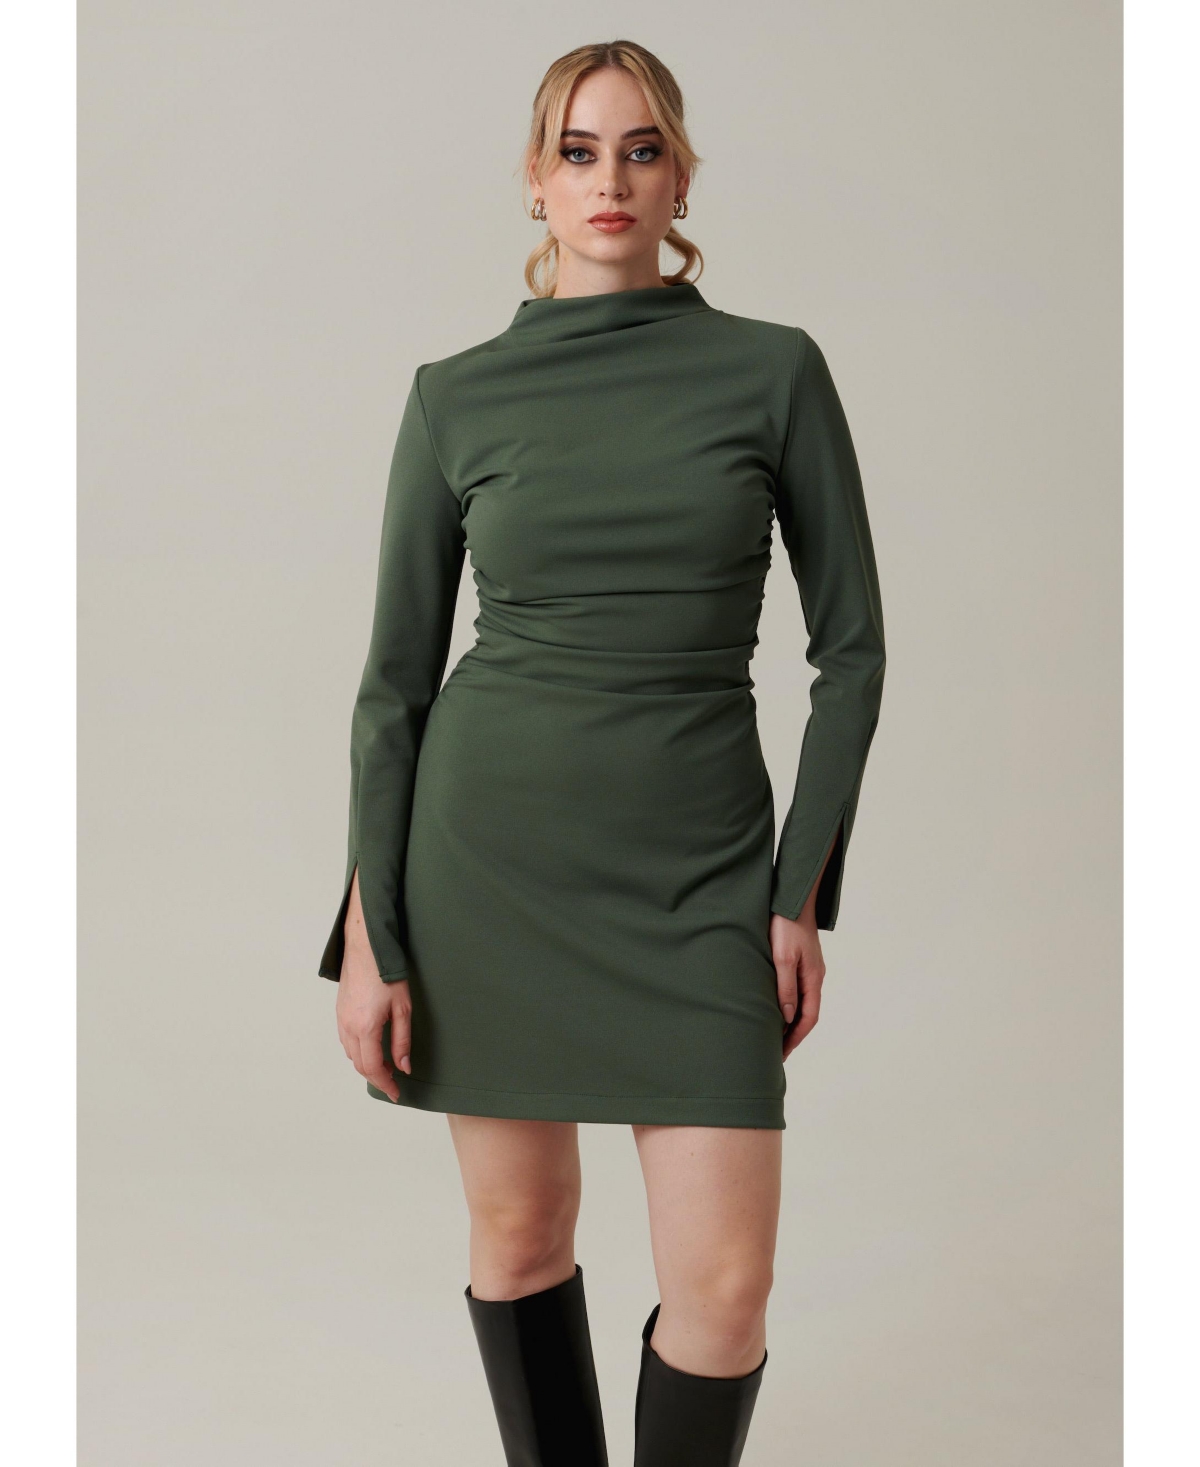 Women's Long sleeve & comfortable mini dress with pleated details near waistline, slits on sleeves - Smokey green